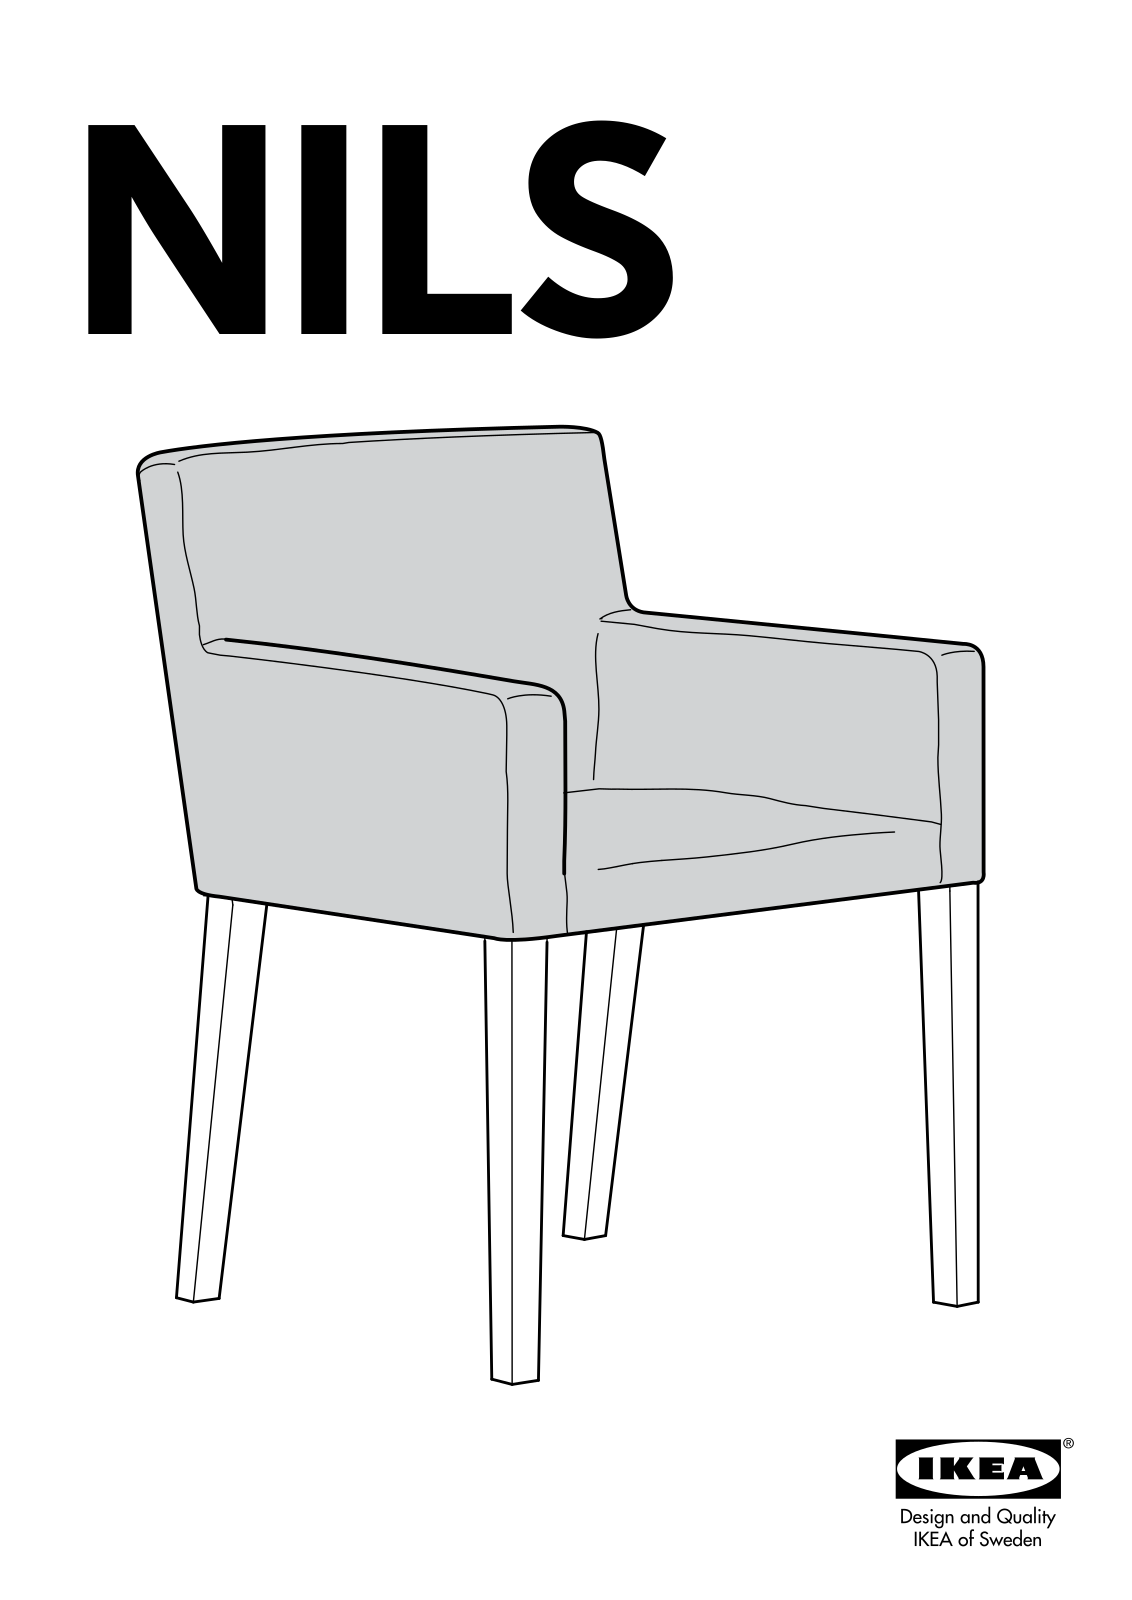 IKEA NILS User Manual